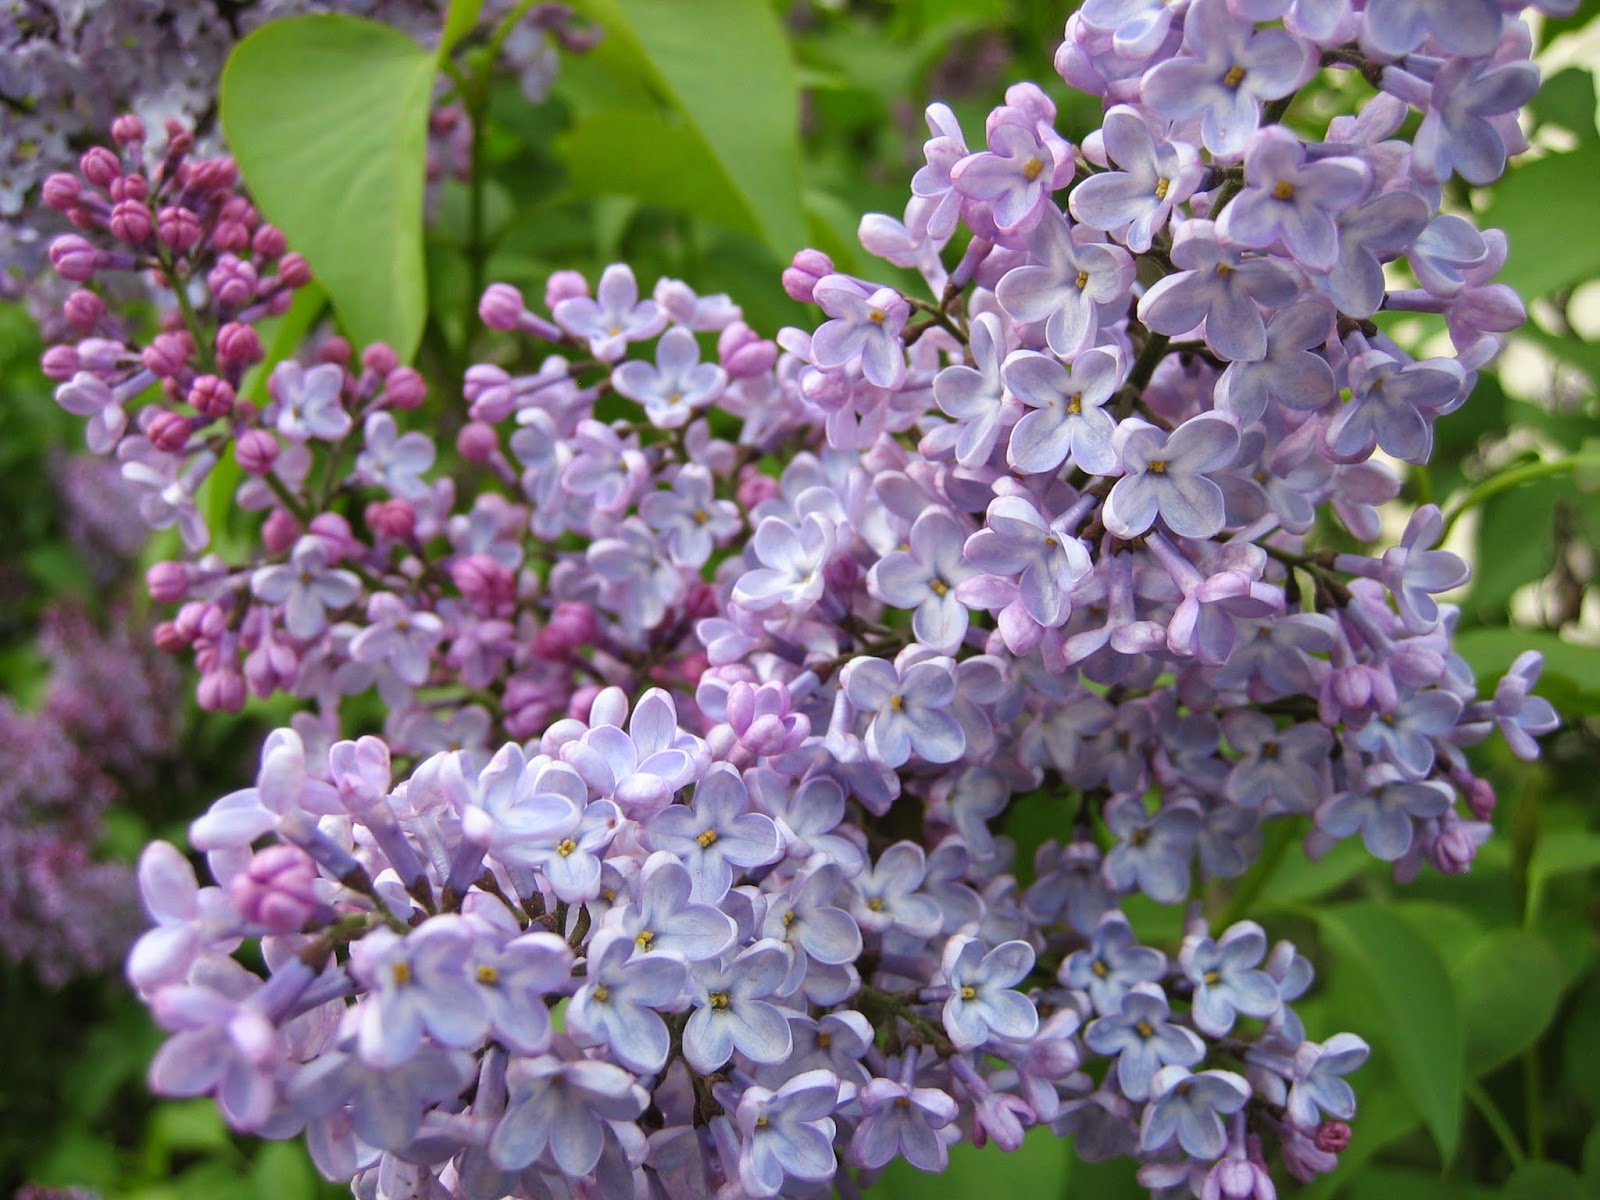 Willowbrook Park: We'll gather lilacs...